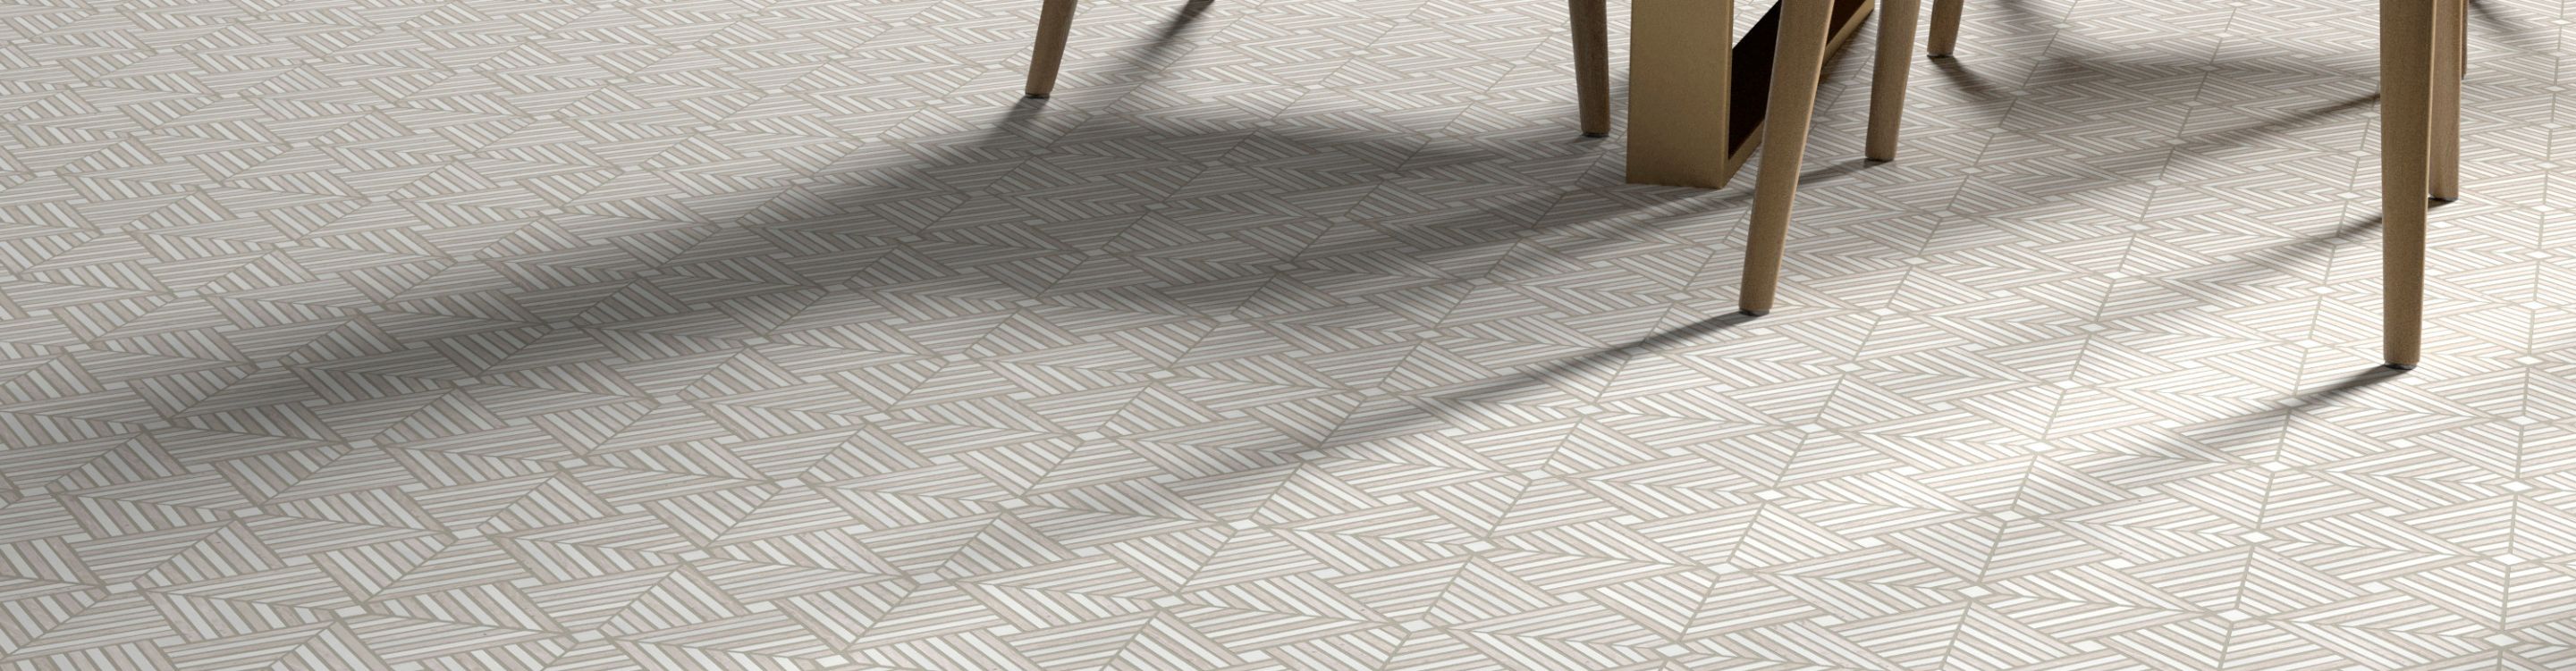 mosaic tile flooring in dining room